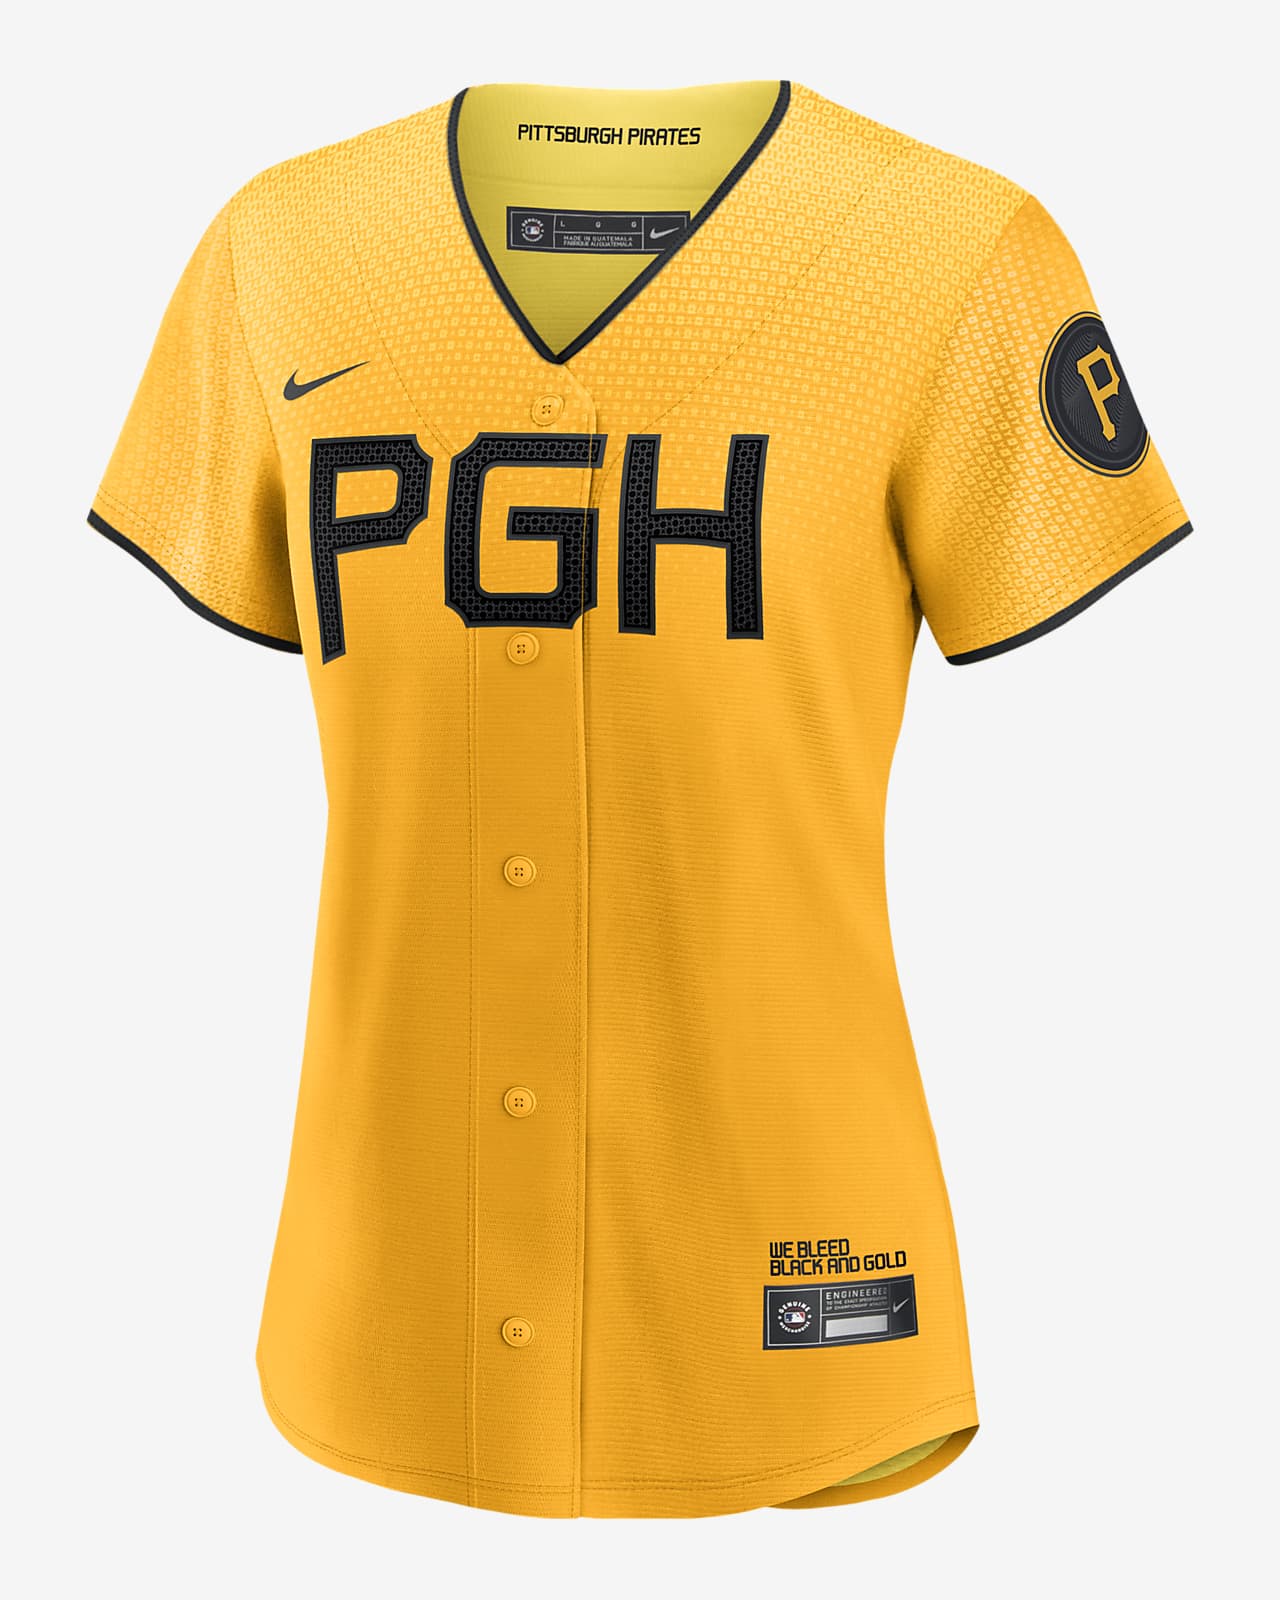 MLB Pittsburgh Pirates City Connect (Ke'Bryan Hayes) Women's Replica Baseball Jersey